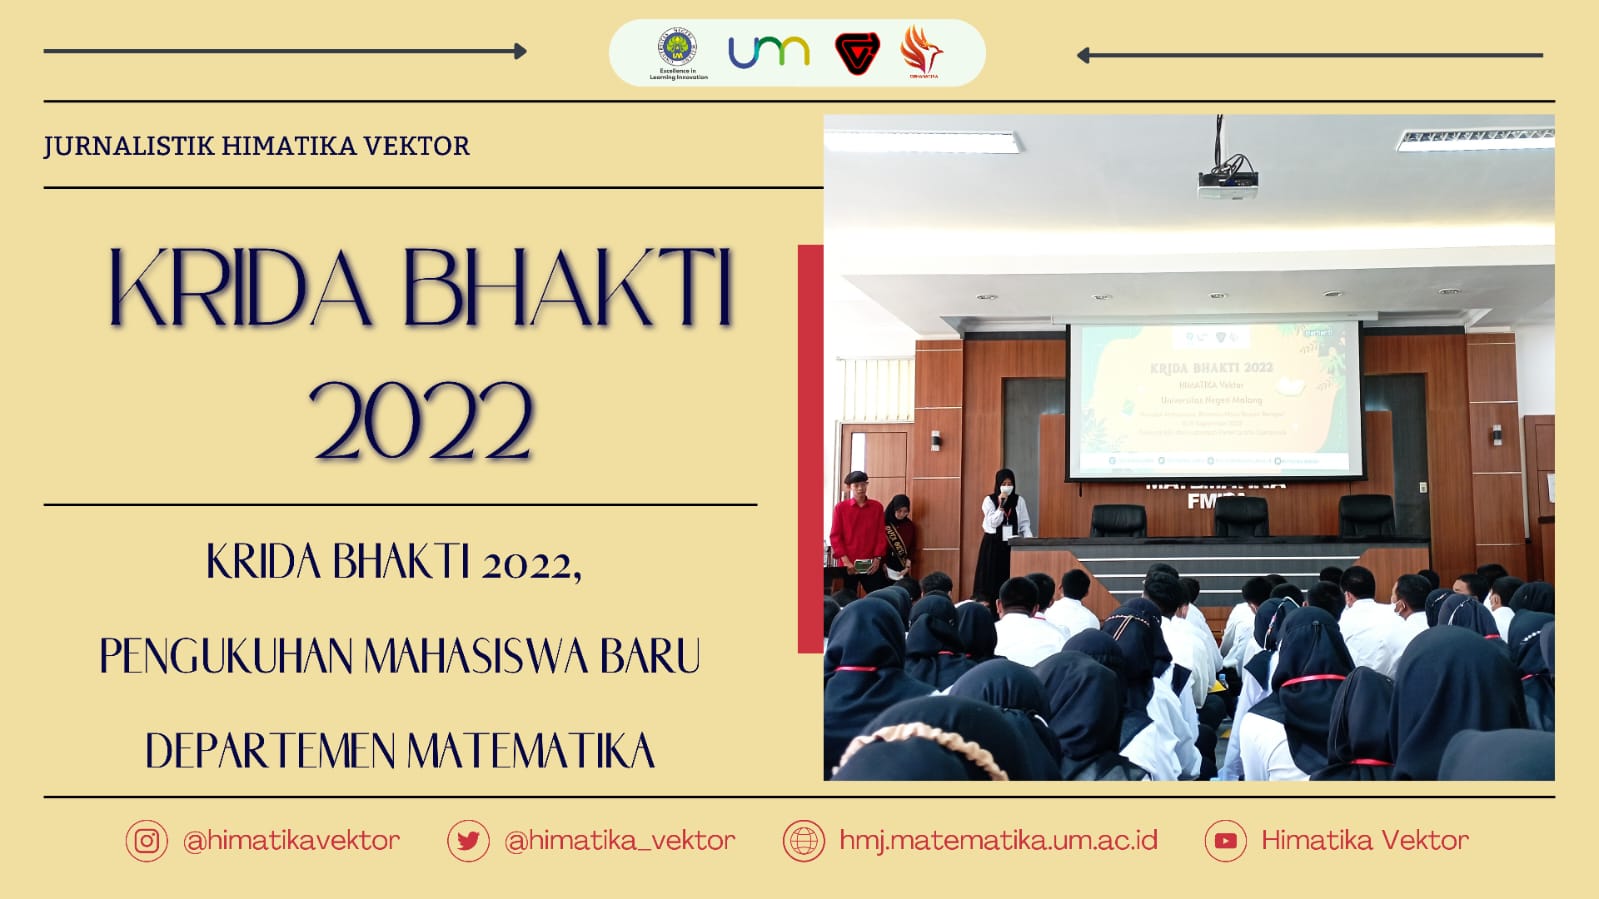 Krida Bhakti 2022, Pengukuhan Mahasiswa Baru Departemen Matematika